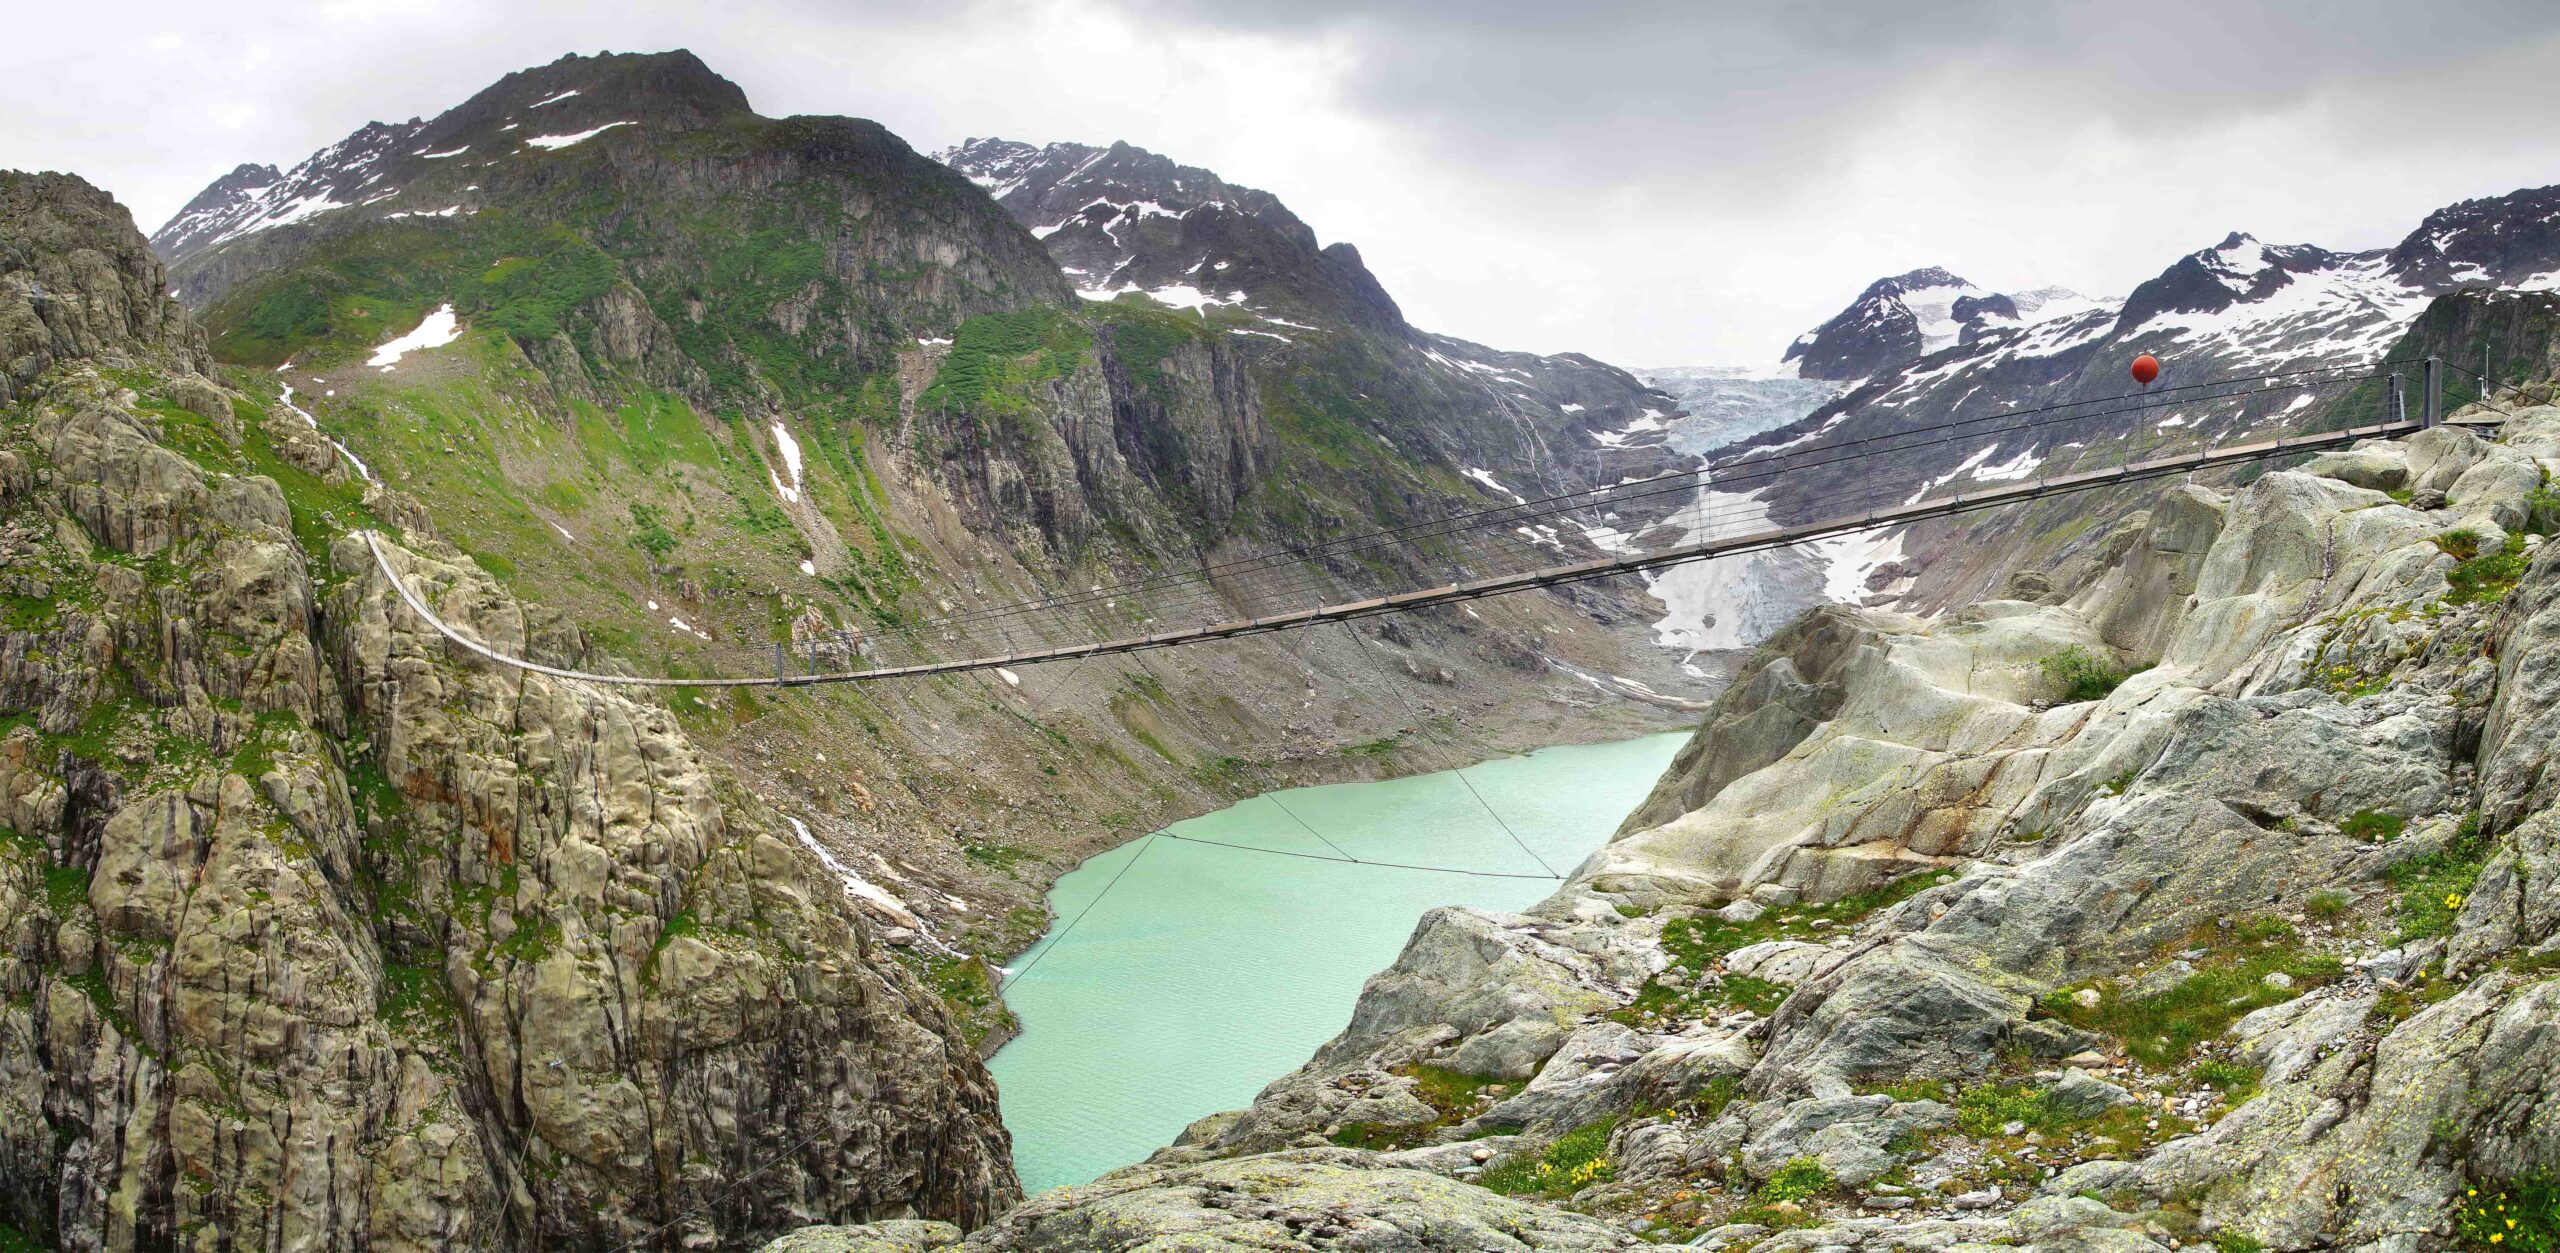 Trift Bridge - Bridging the Glacial Chasm